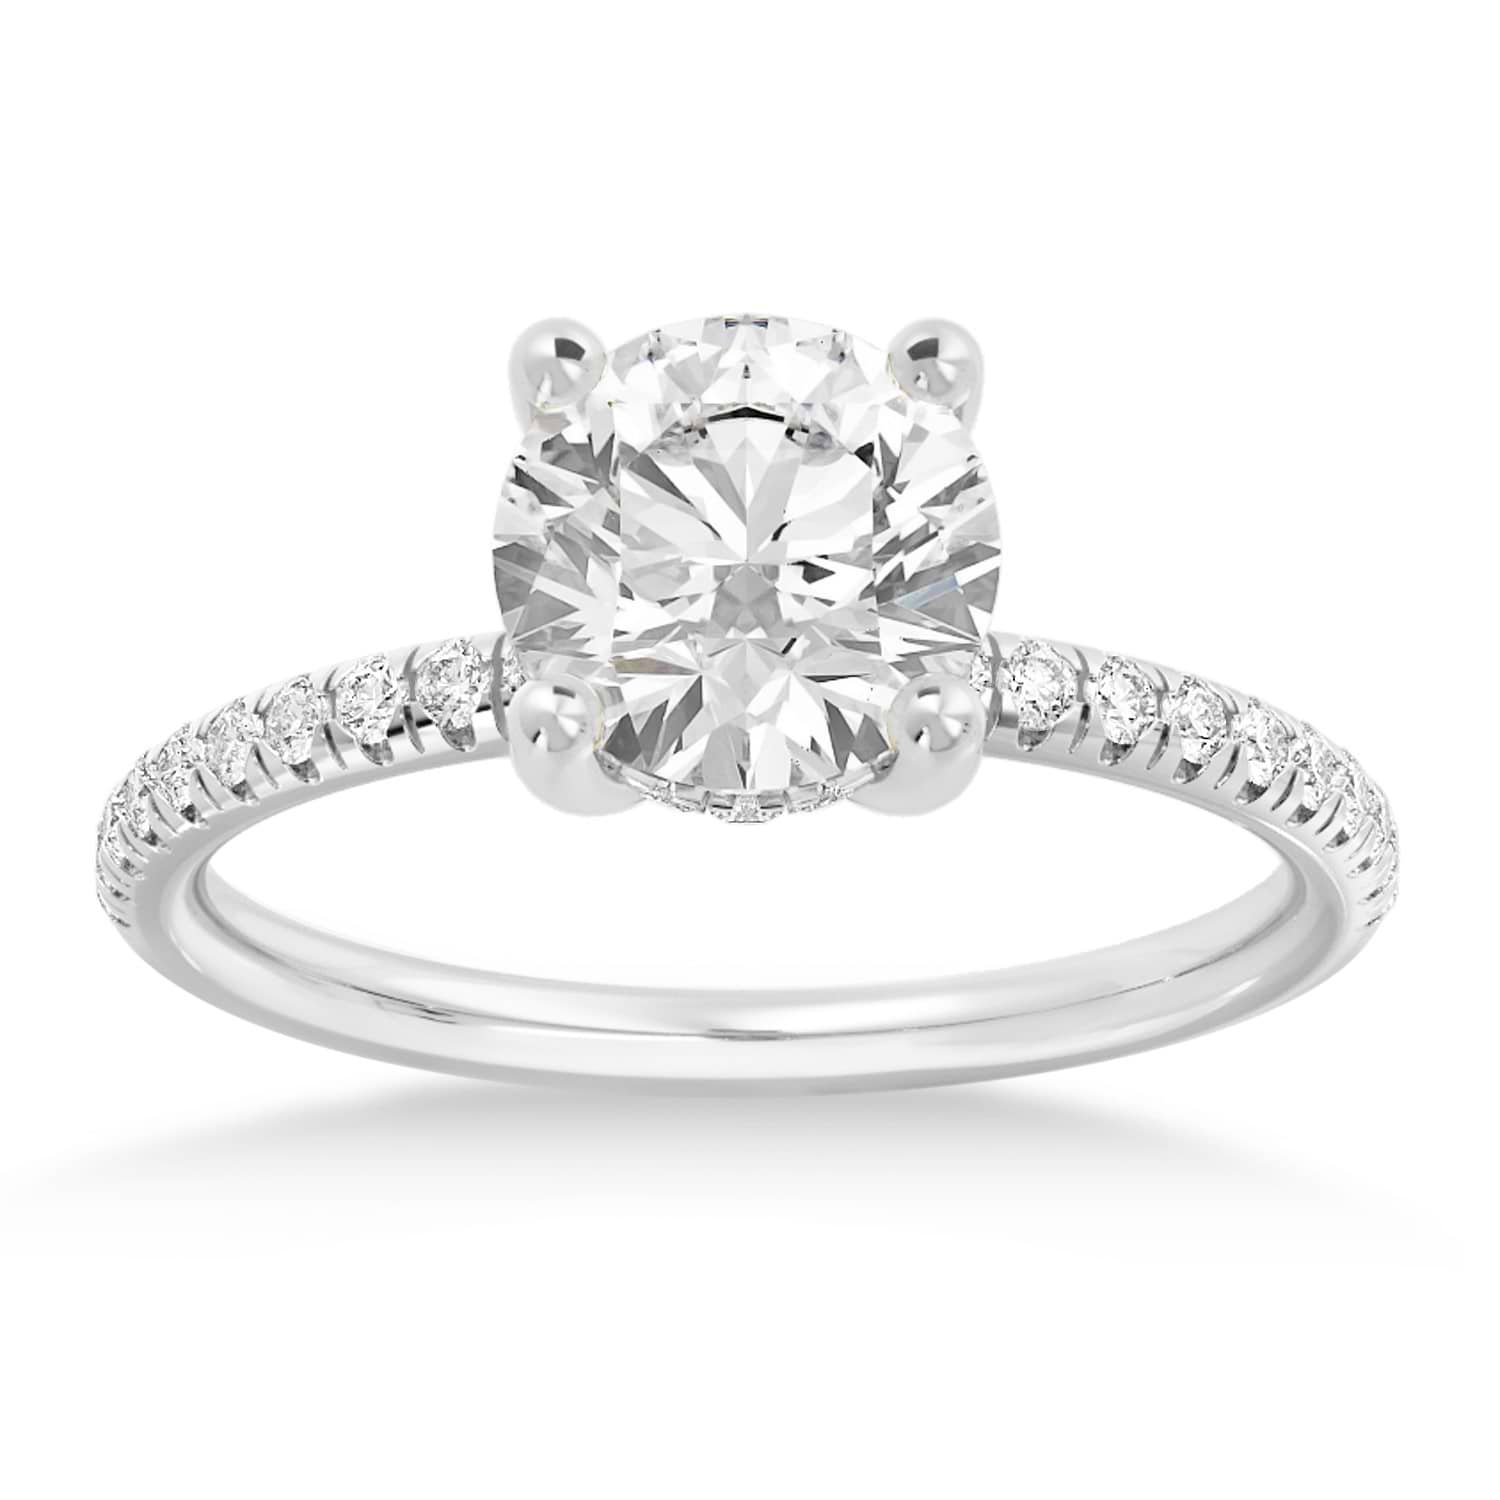 Lab Grown Diamond Hidden Halo Pave' Engagement Ring 14k White Gold (0.26ct)